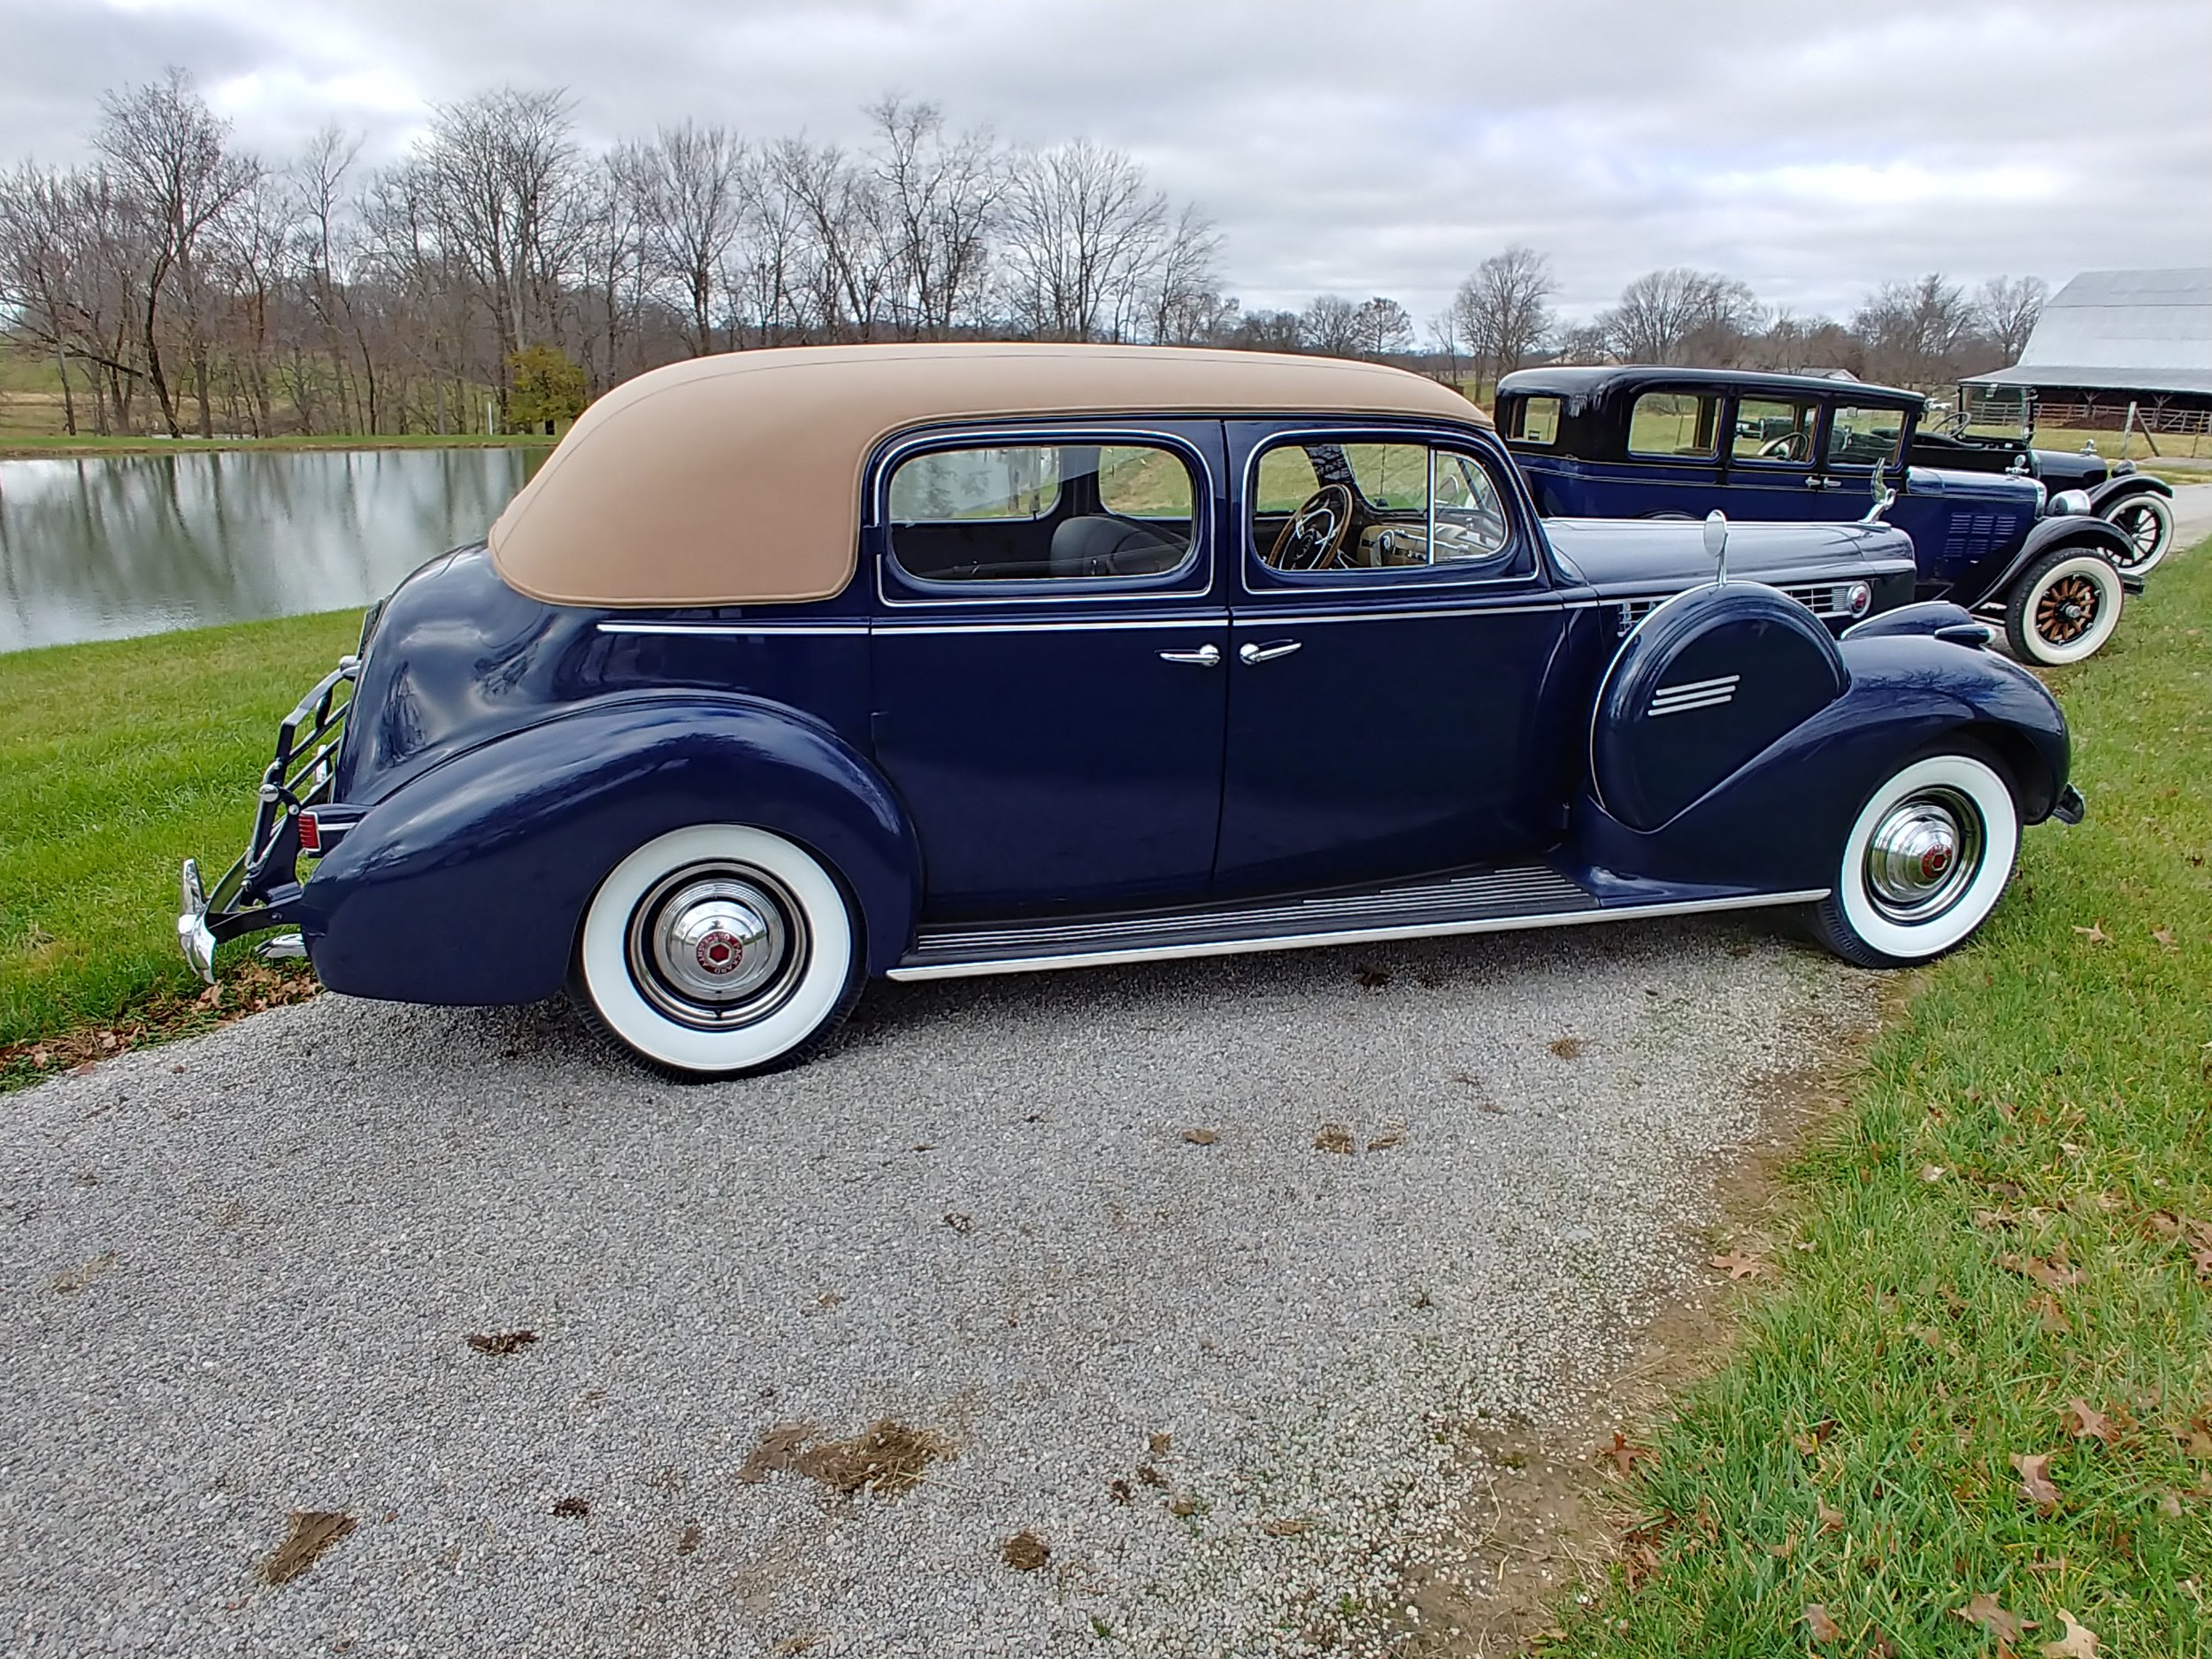   Elegant 1940 Packard Super Eight Formal Sedan owned by Matt and Katie Palisch  